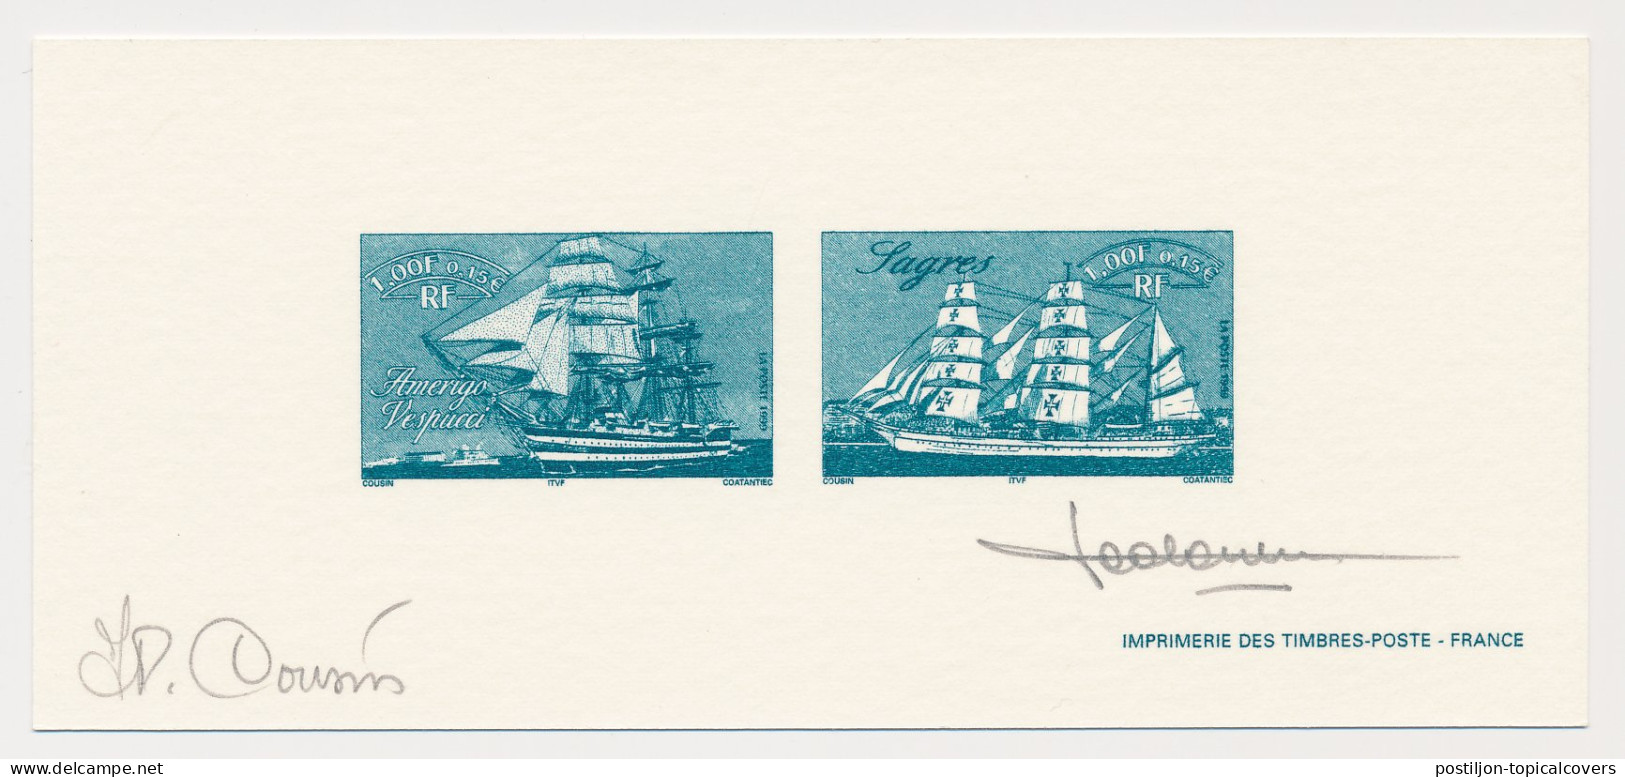 France 1999 - Epreuve / Proof Signed By Engraver Tallship - Sailing Ship - Amerigo Vespucci - Sagres - Barche